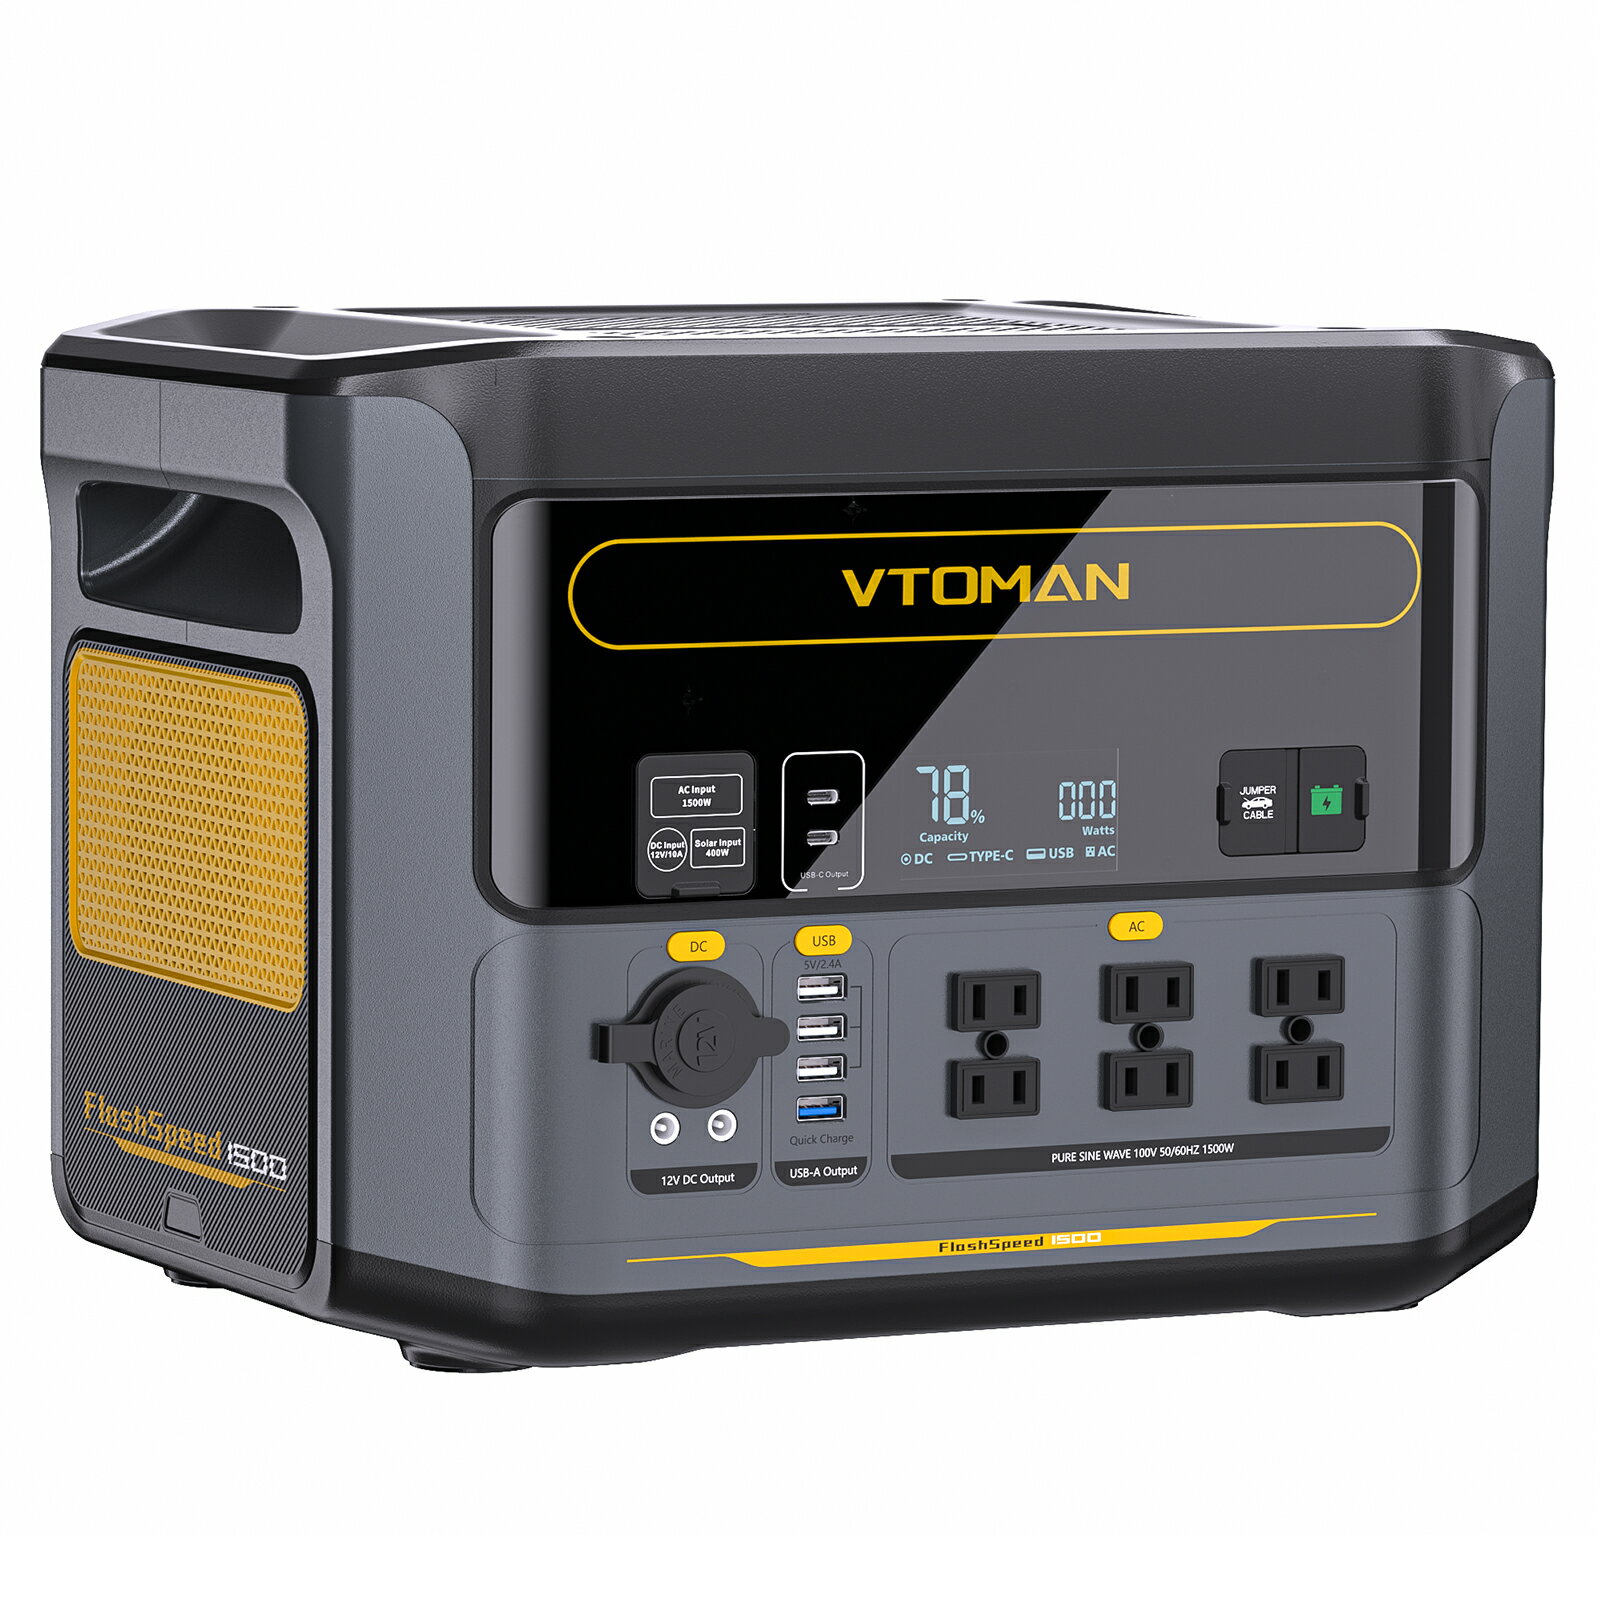 VTOMAN flashspeed1500 ポータブル電源 リン酸鉄 大容量 1548Wh ポータブルバッテリー 純正弦波 AC1500W ジャンプスターター機能 容量拡張可能 急速充電 アウトドア 車中泊 キャンプ 家庭用 防災